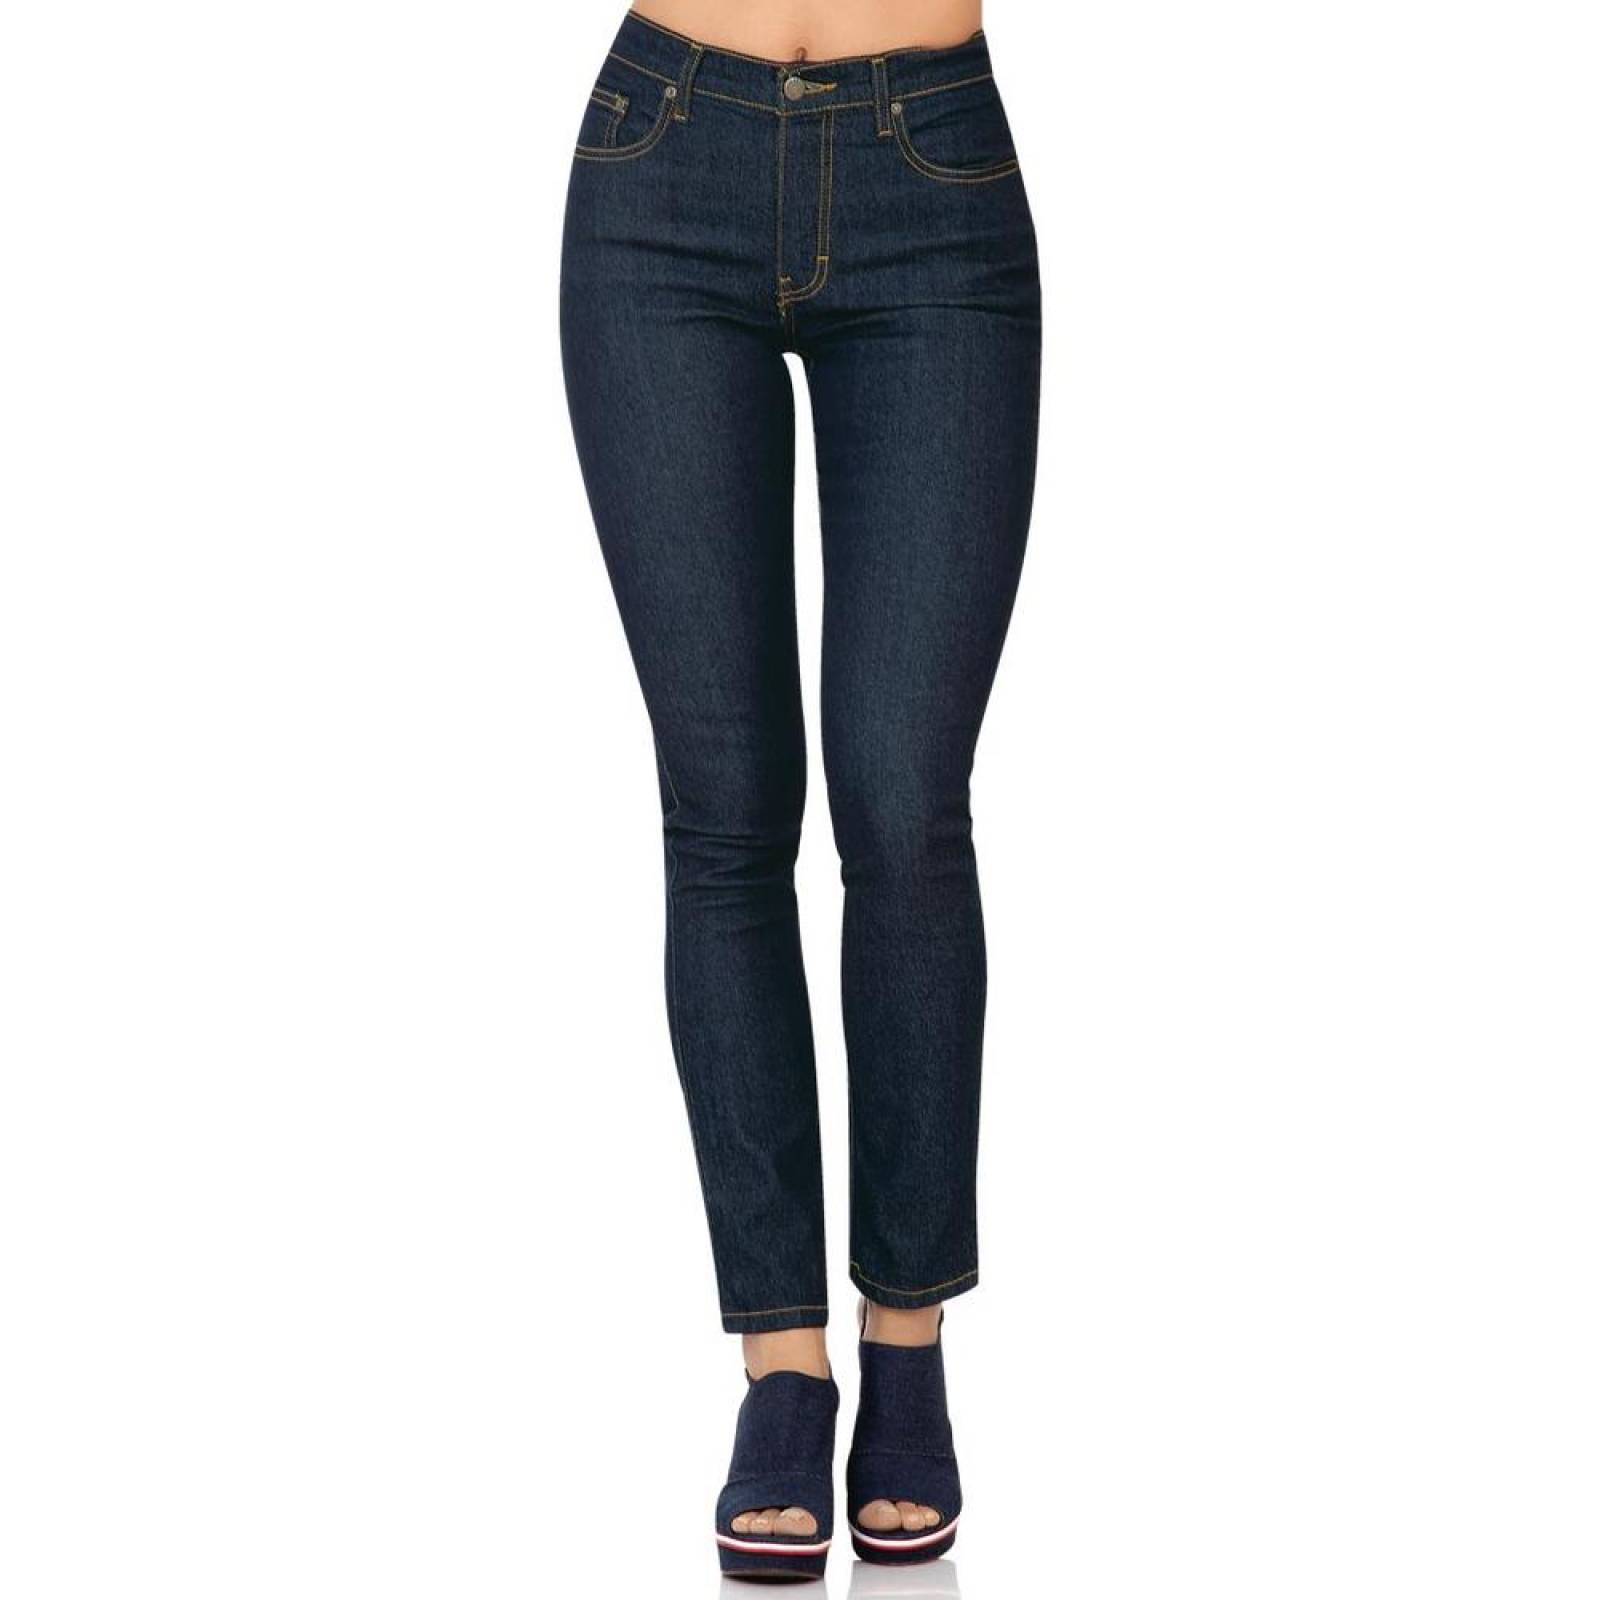 Jeans Básico Mujer SCandia Indigo 65003004 Mezclilla Stretch 